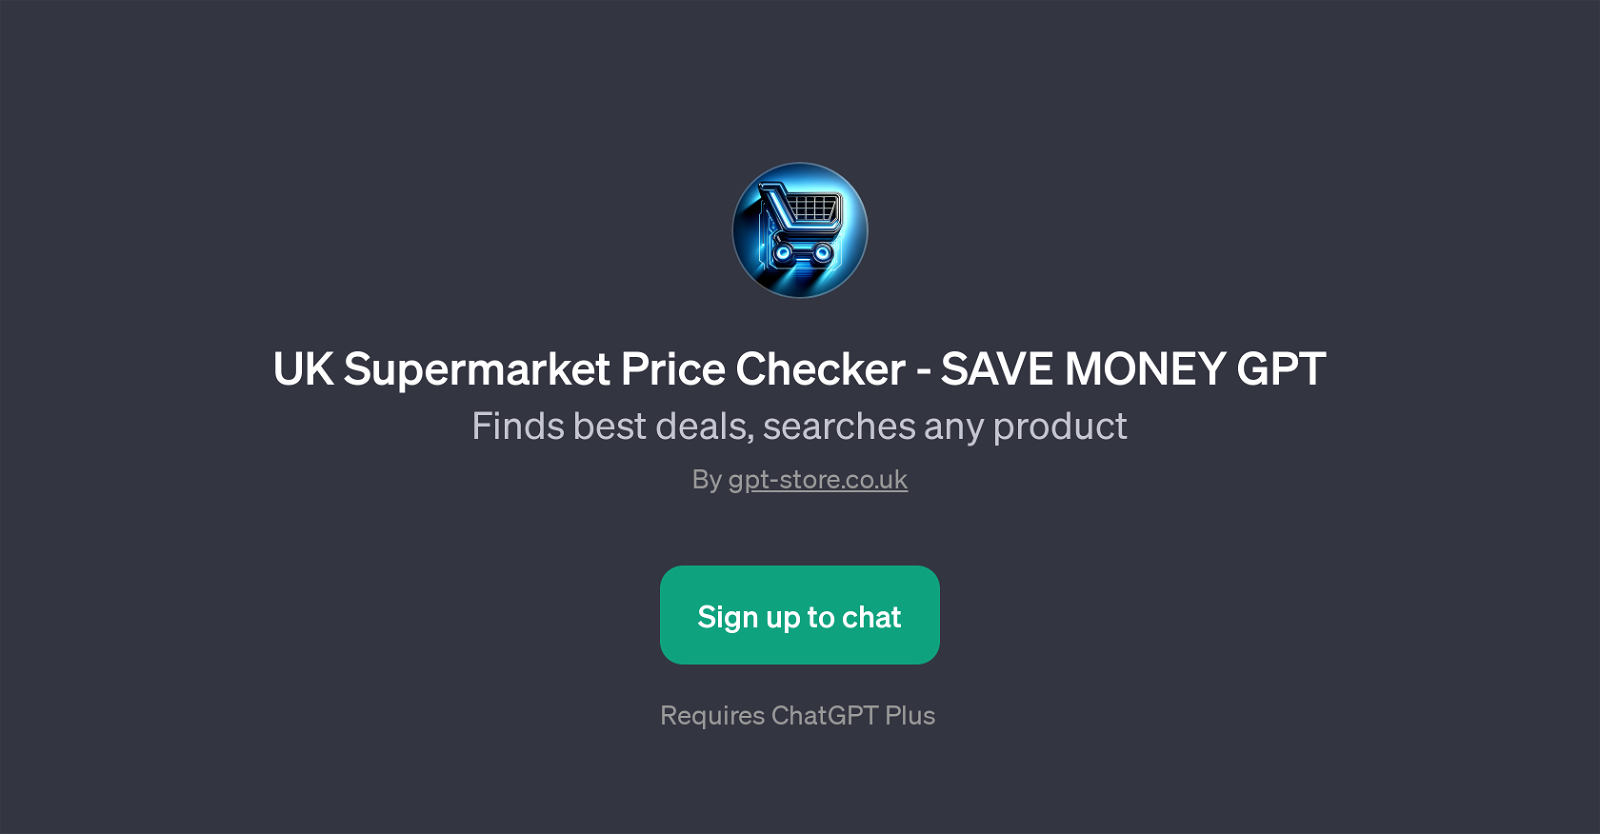 UK Supermarket Price Checker - SAVE MONEY GPT website